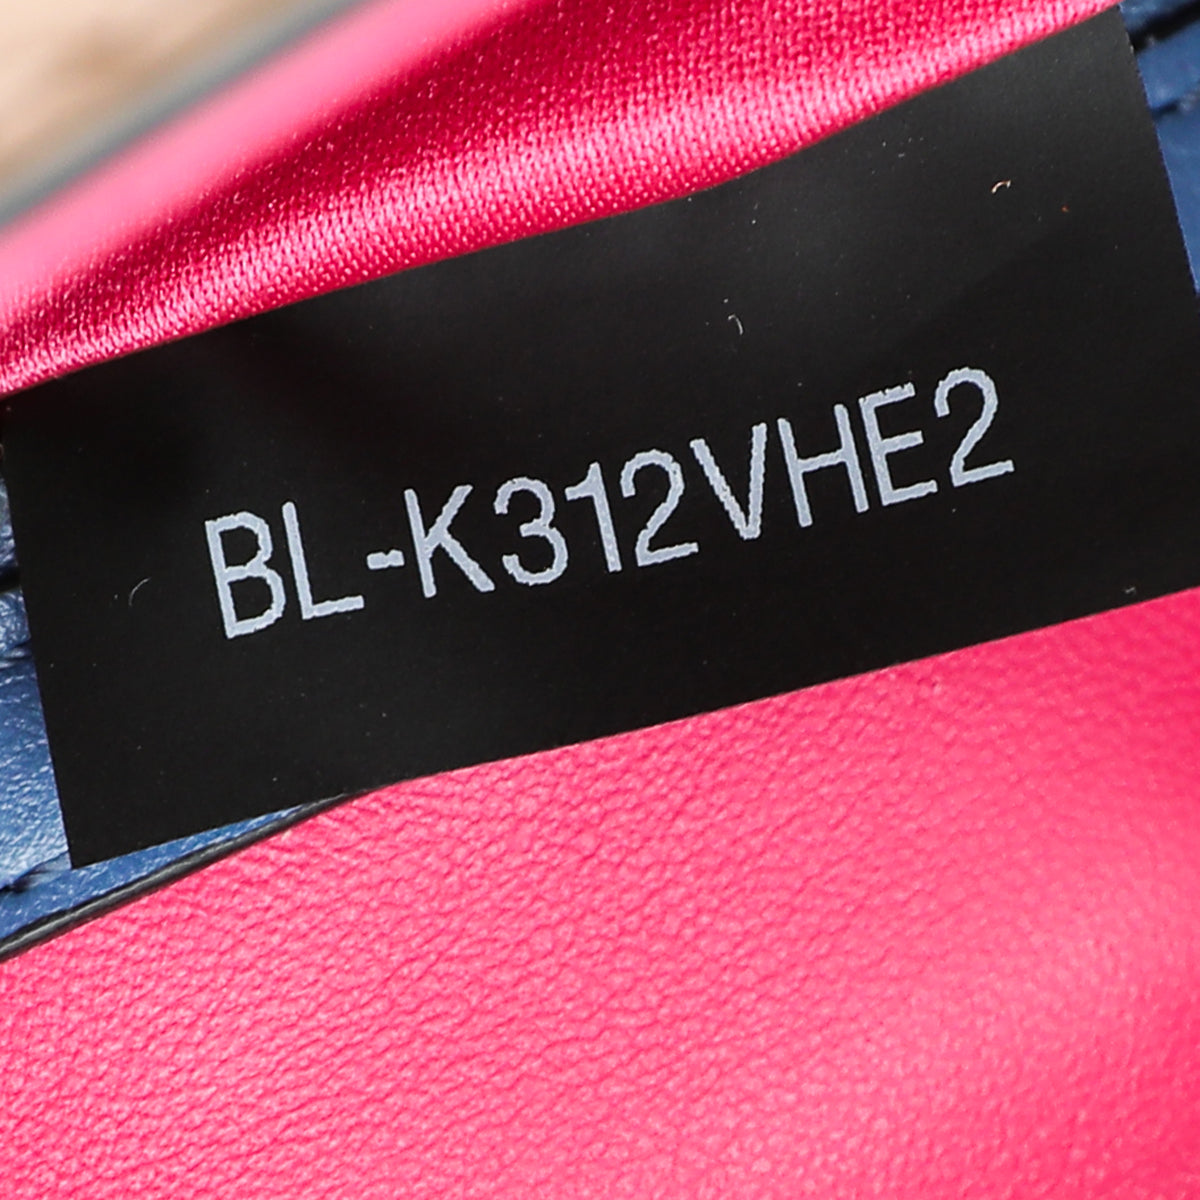 Valentino Multicolor Colorblock Rockstud Glam Lock Flap Bag